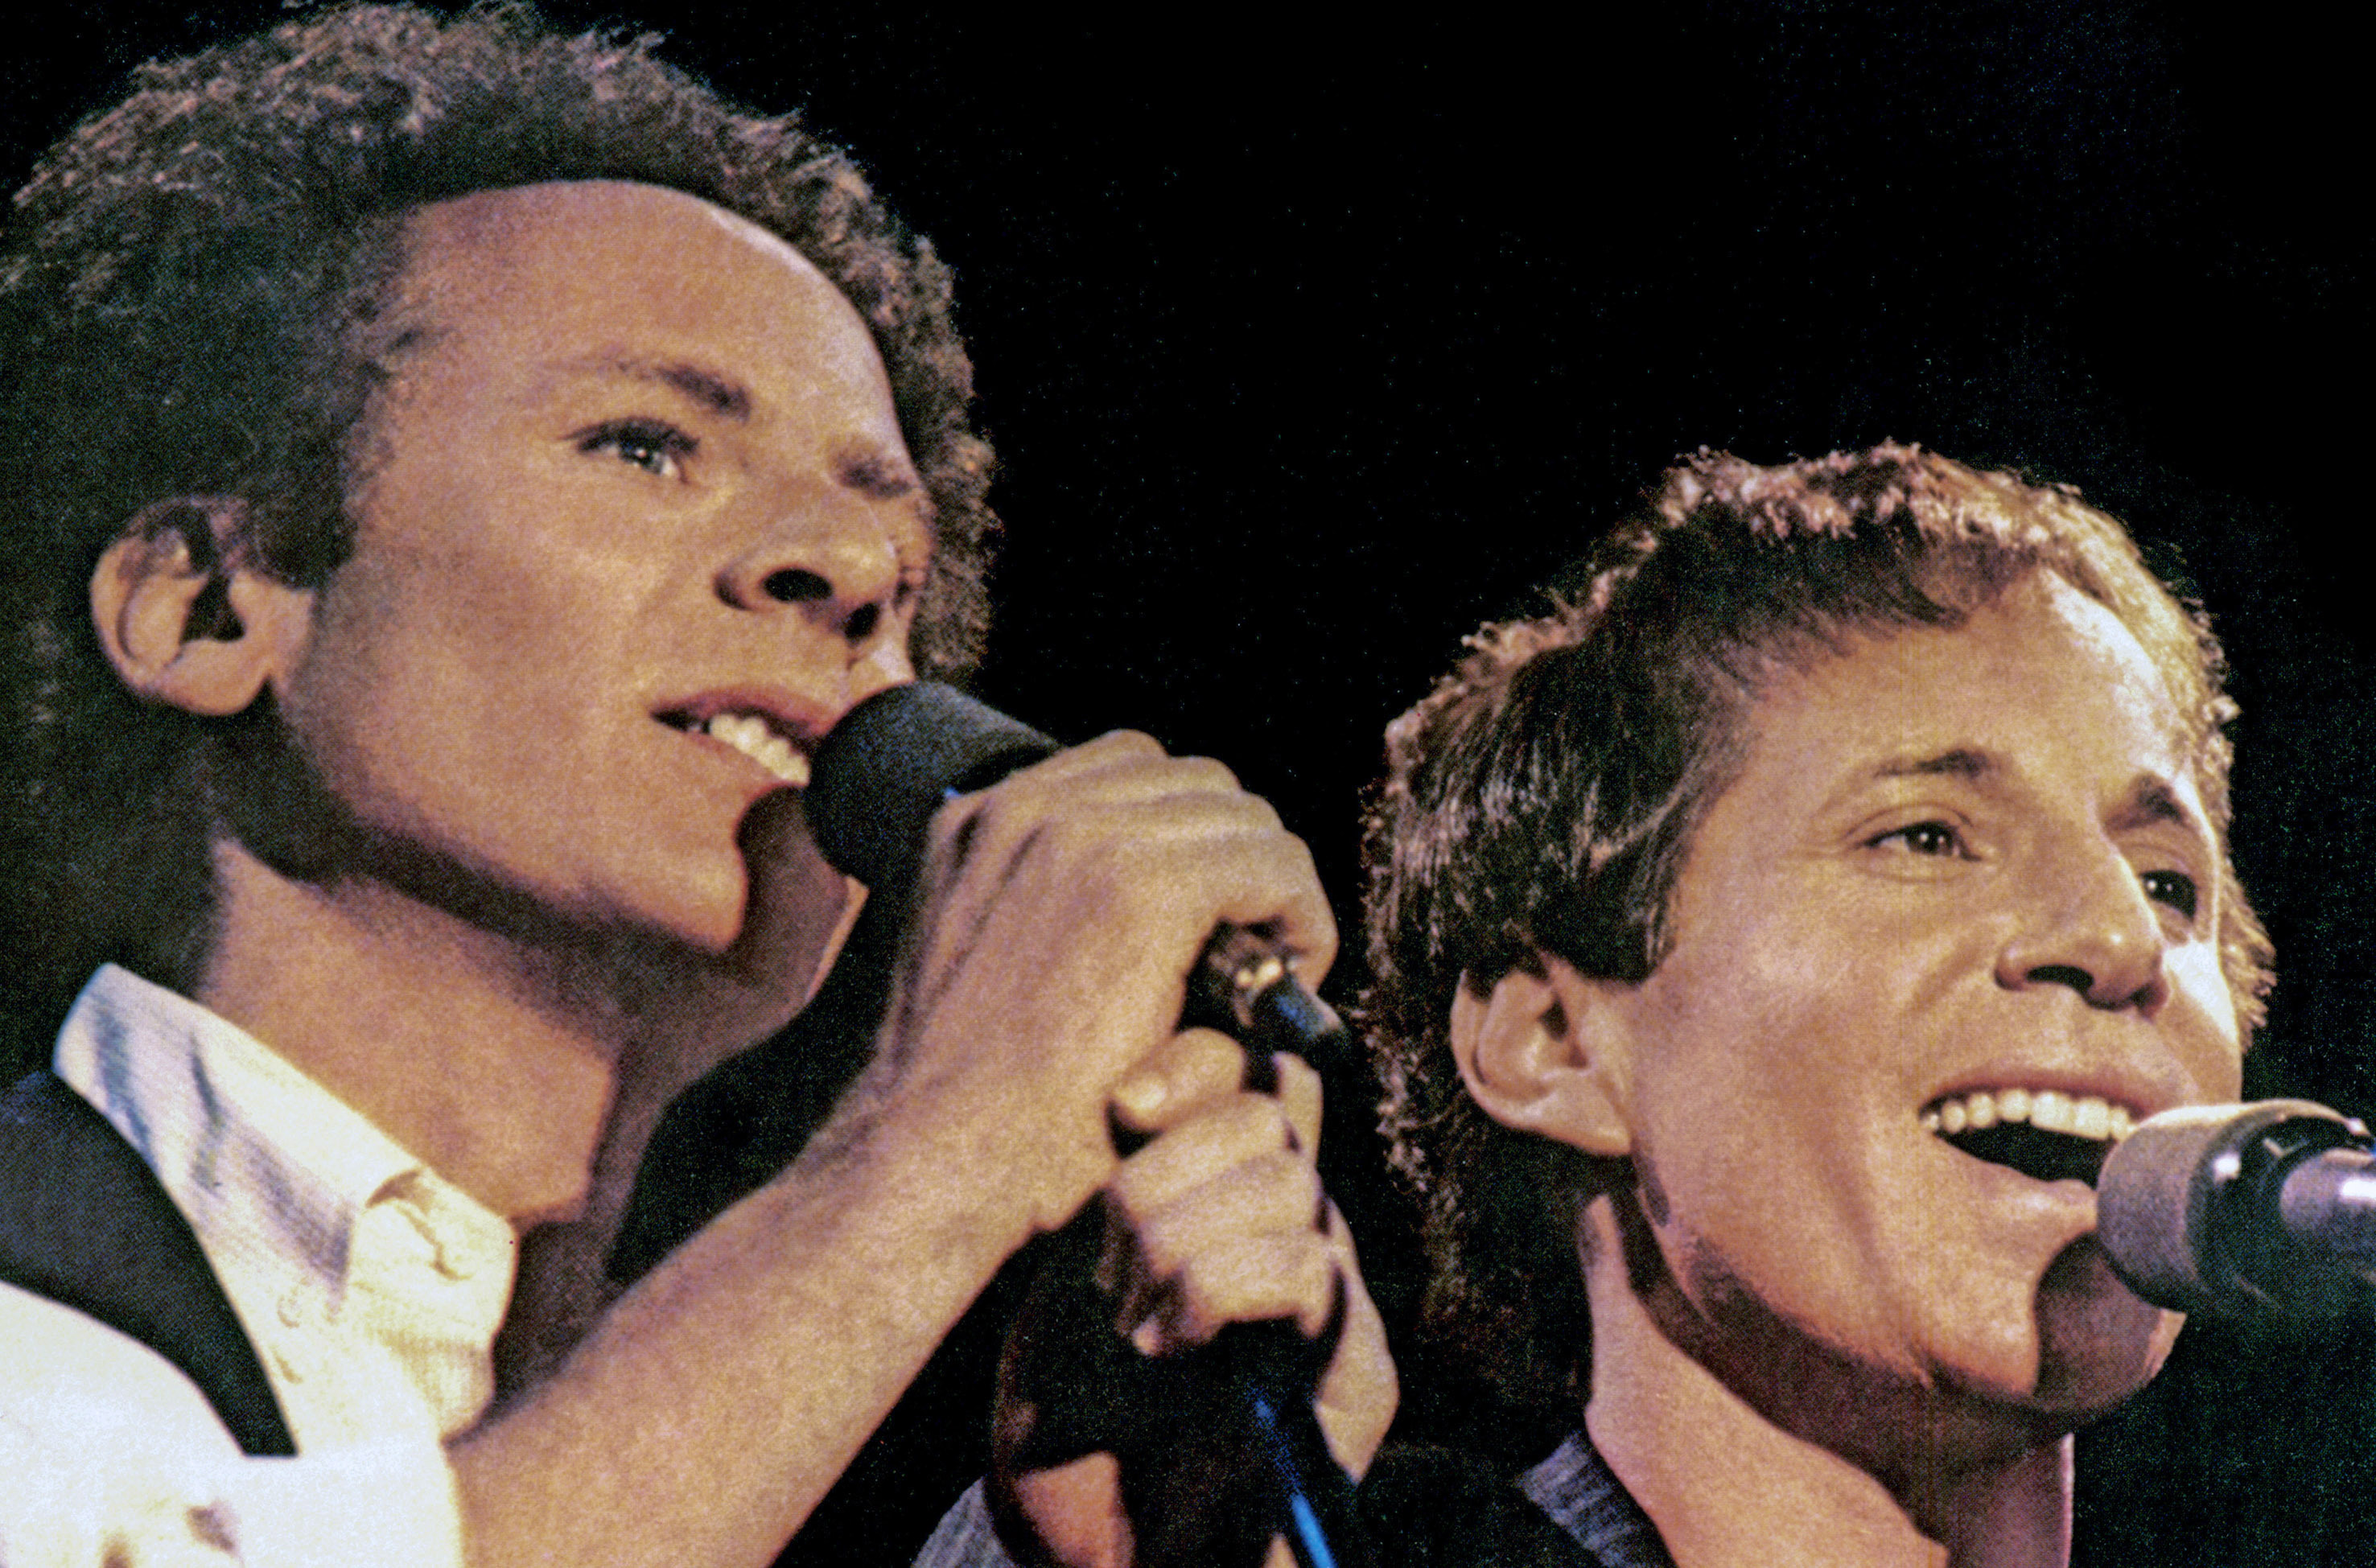 Simon and Garfunkel: Concert in Central Park